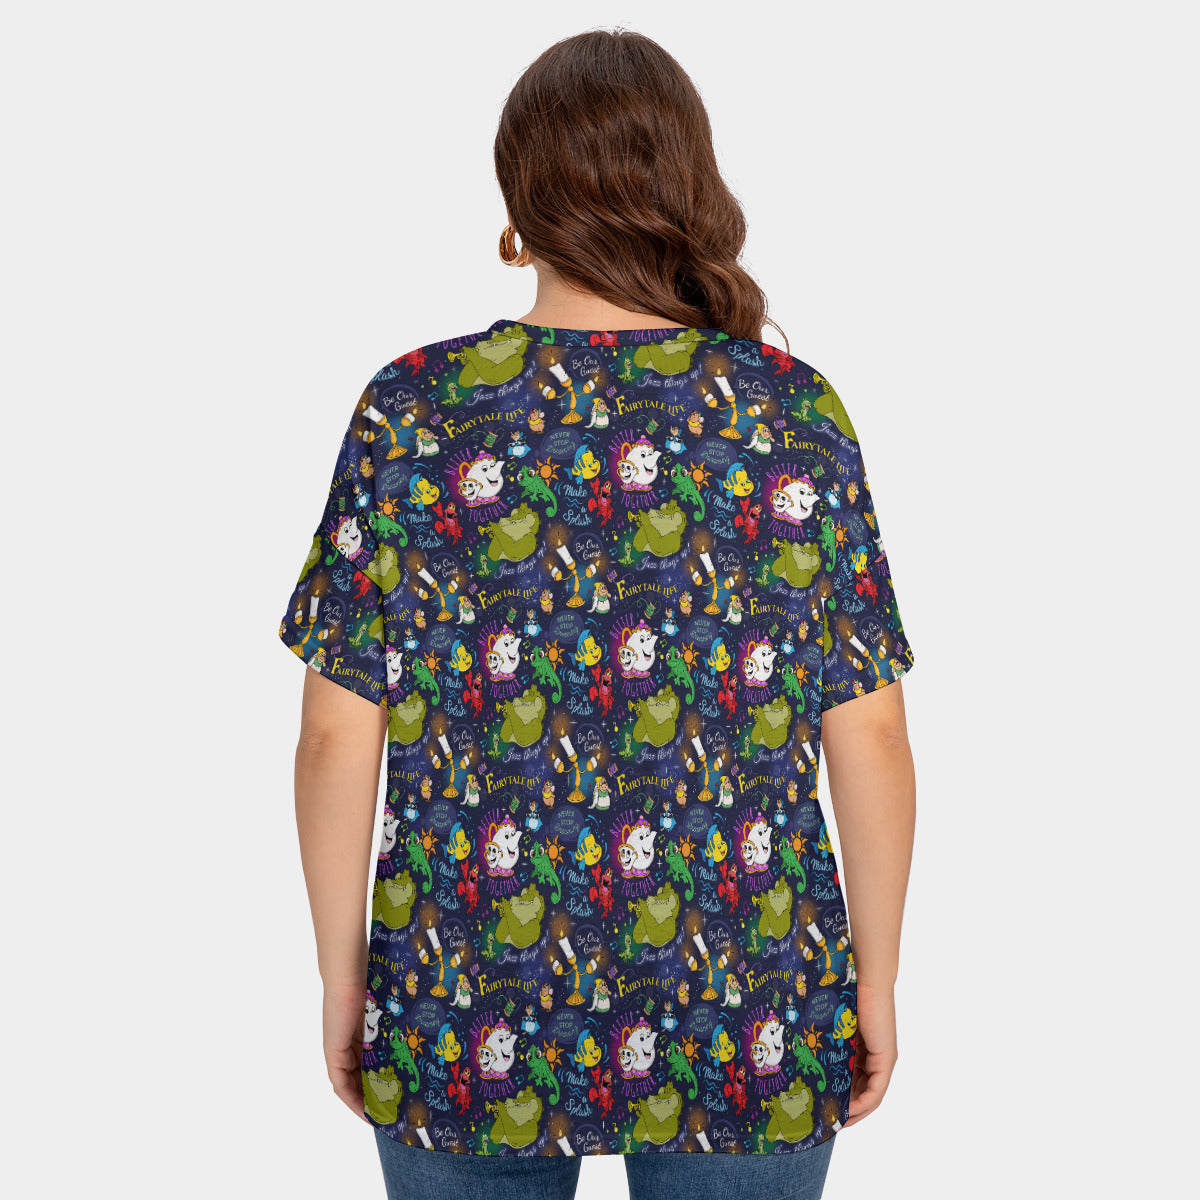 Sidekicks Women's Plus Size Short Sleeve T-shirt With Sleeve Loops